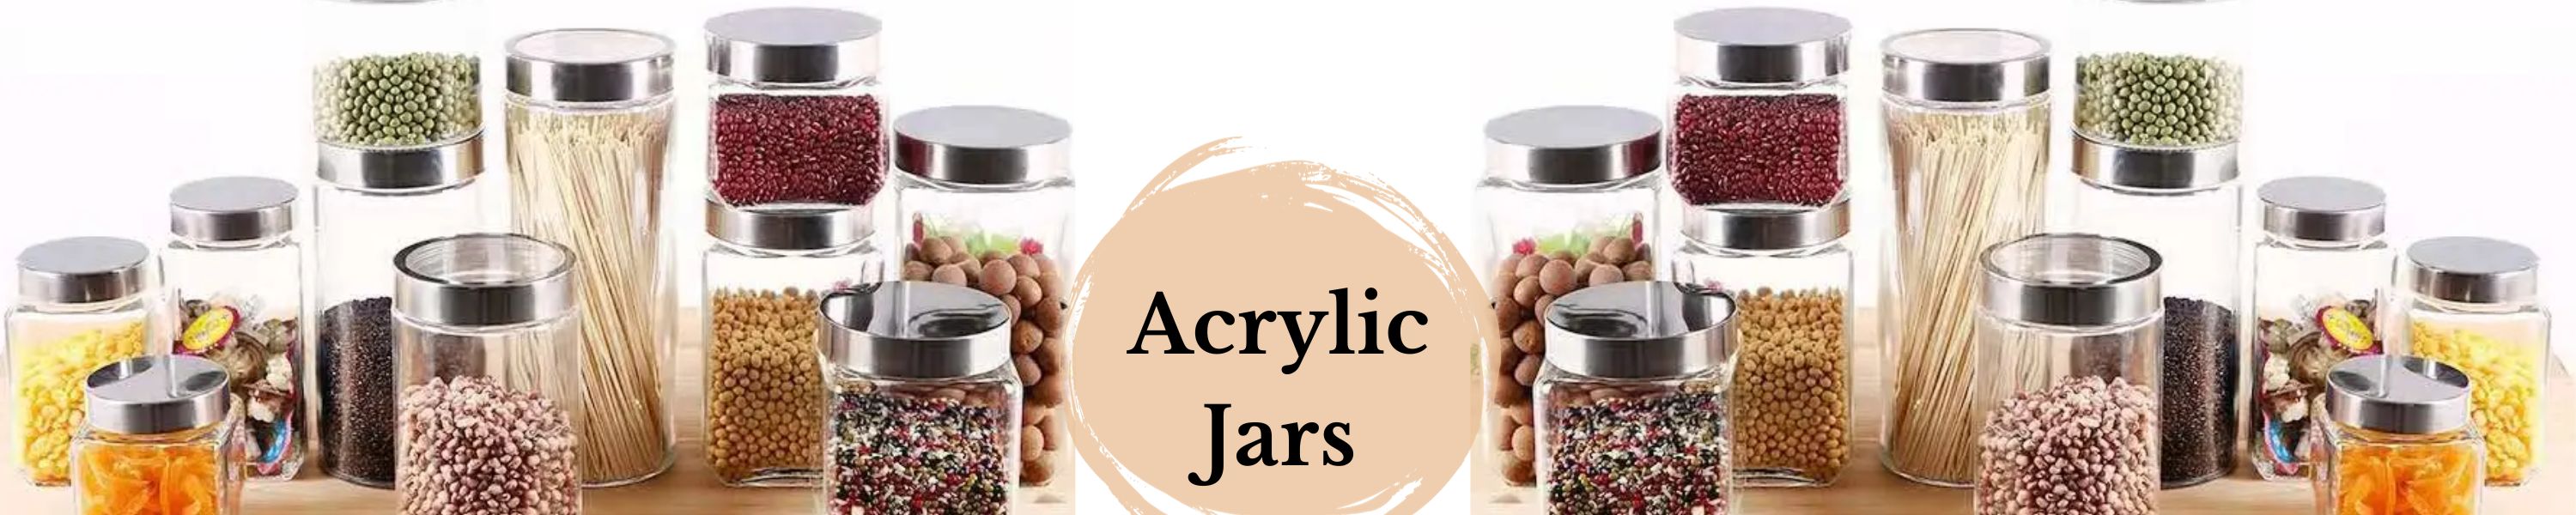 Acrylic Jars